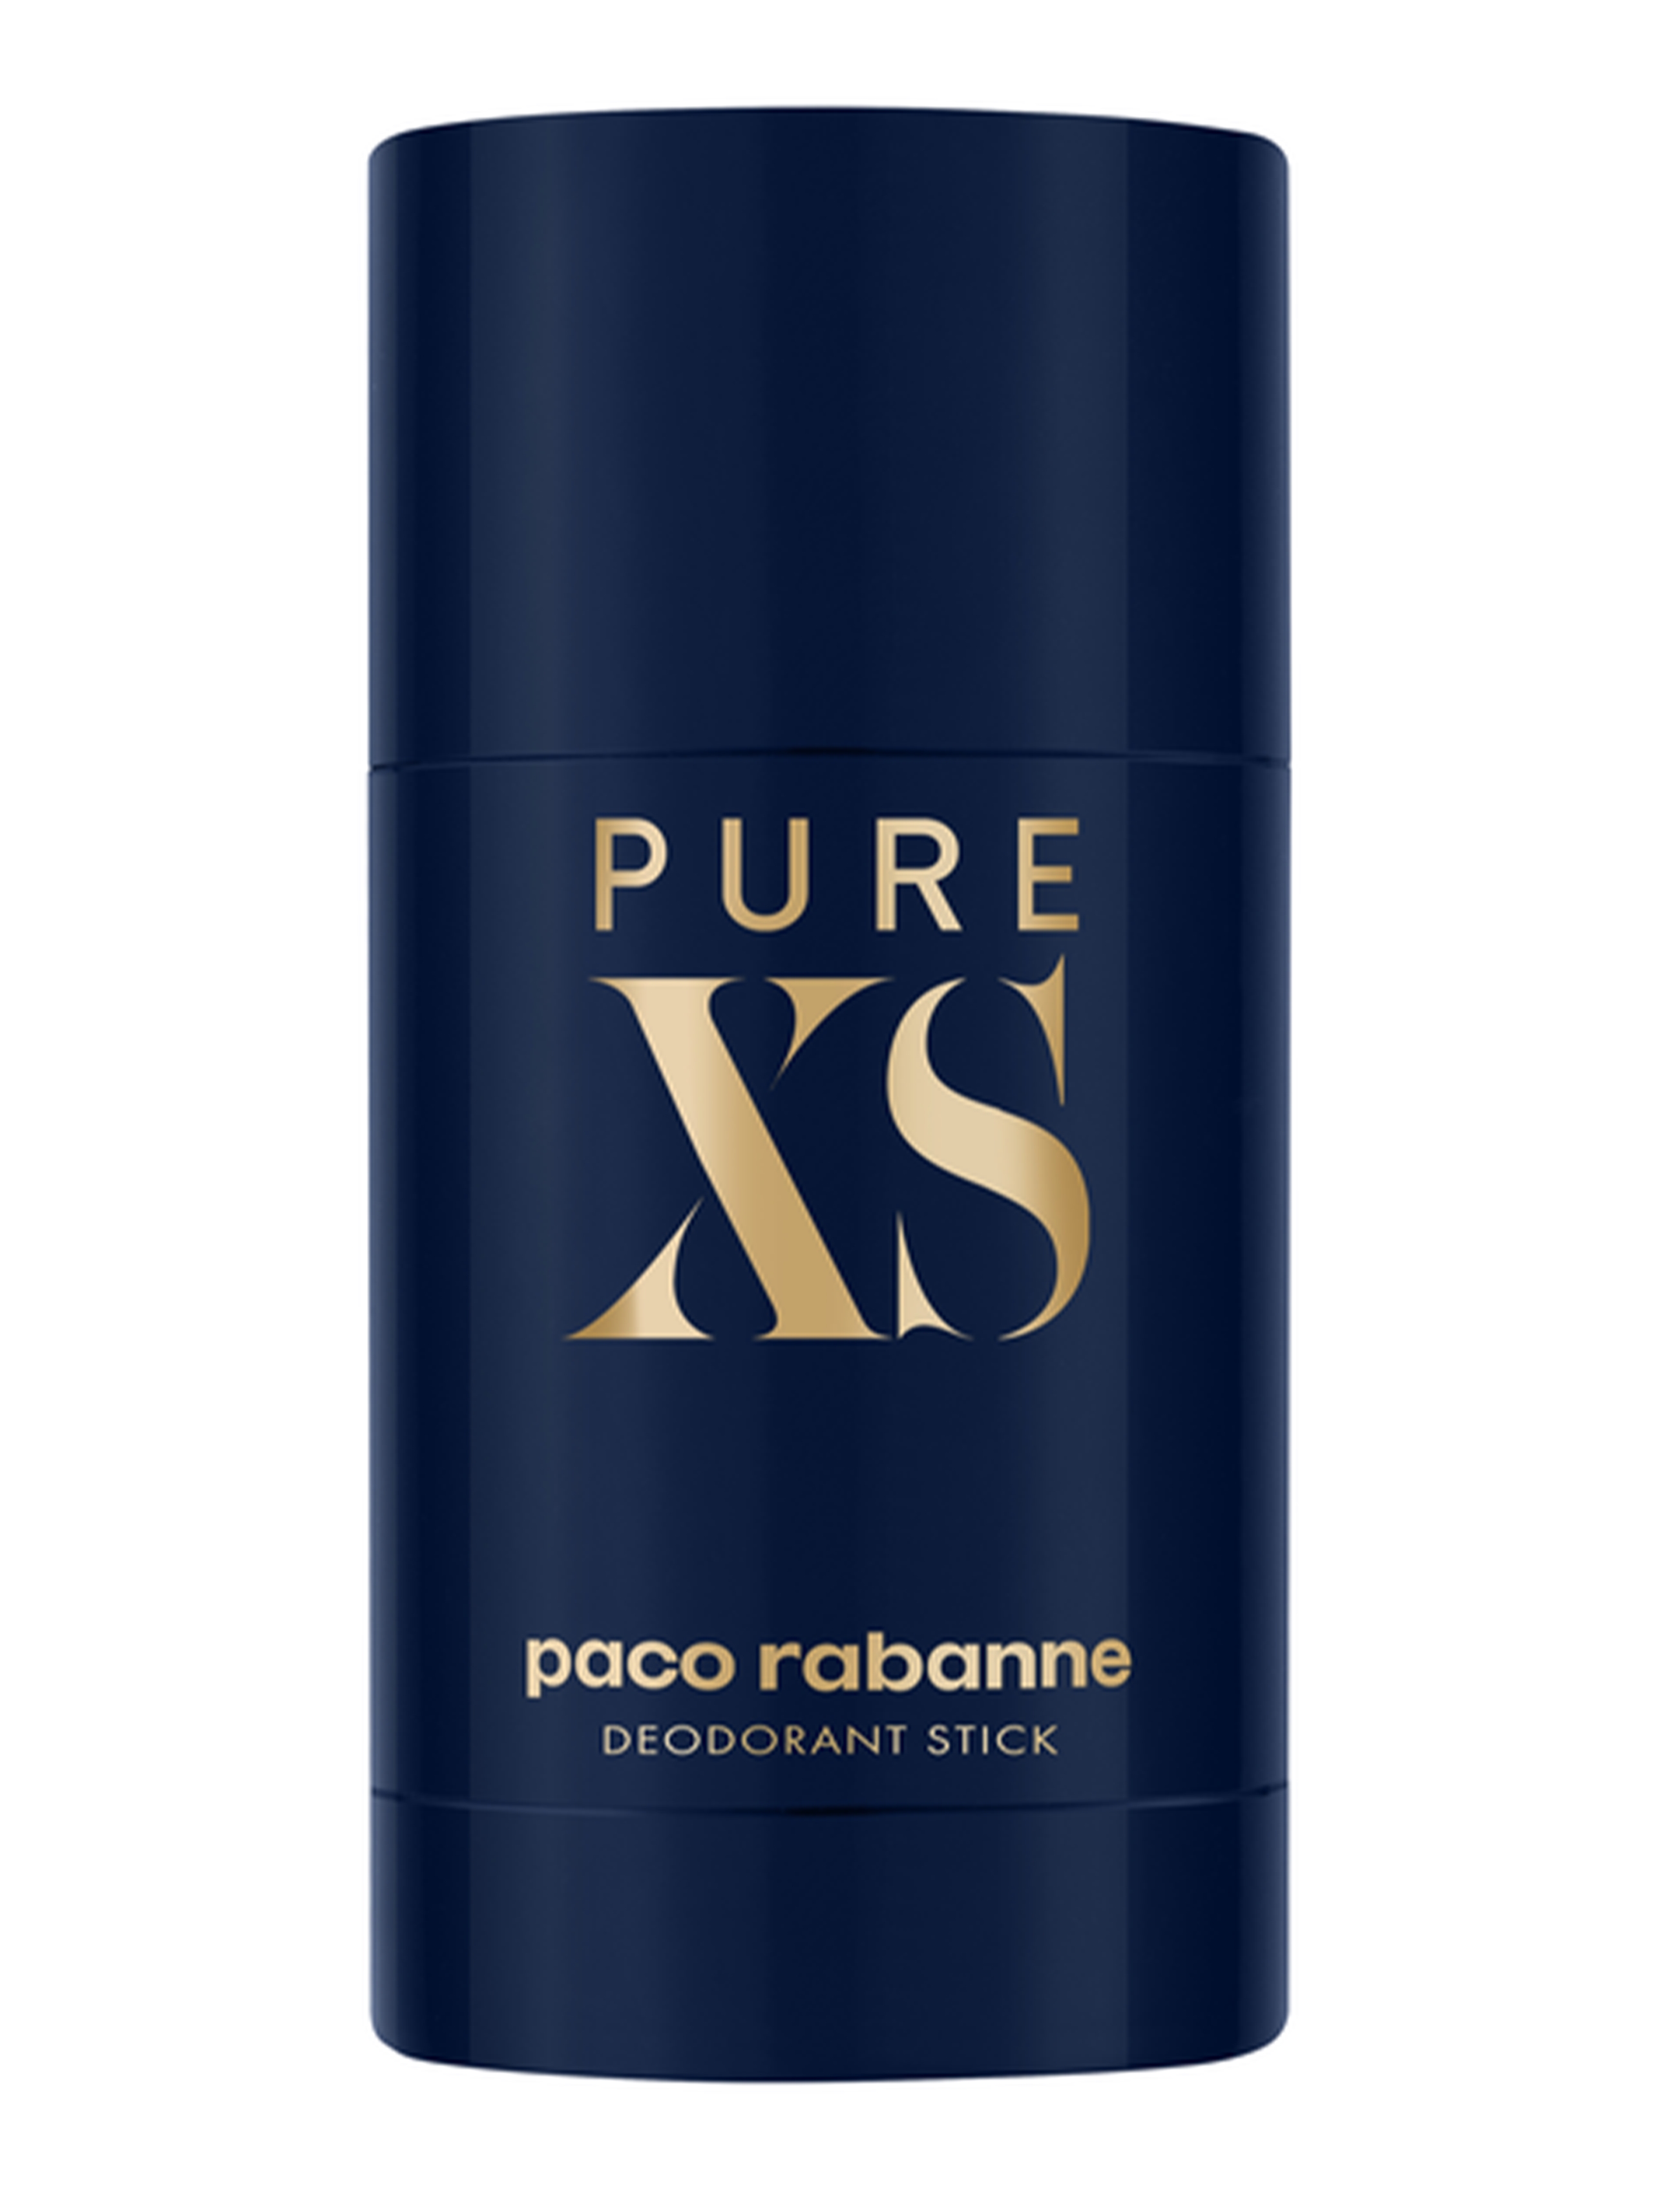 Paco Rabanne Pure XS Deodorant Stick, 75 g